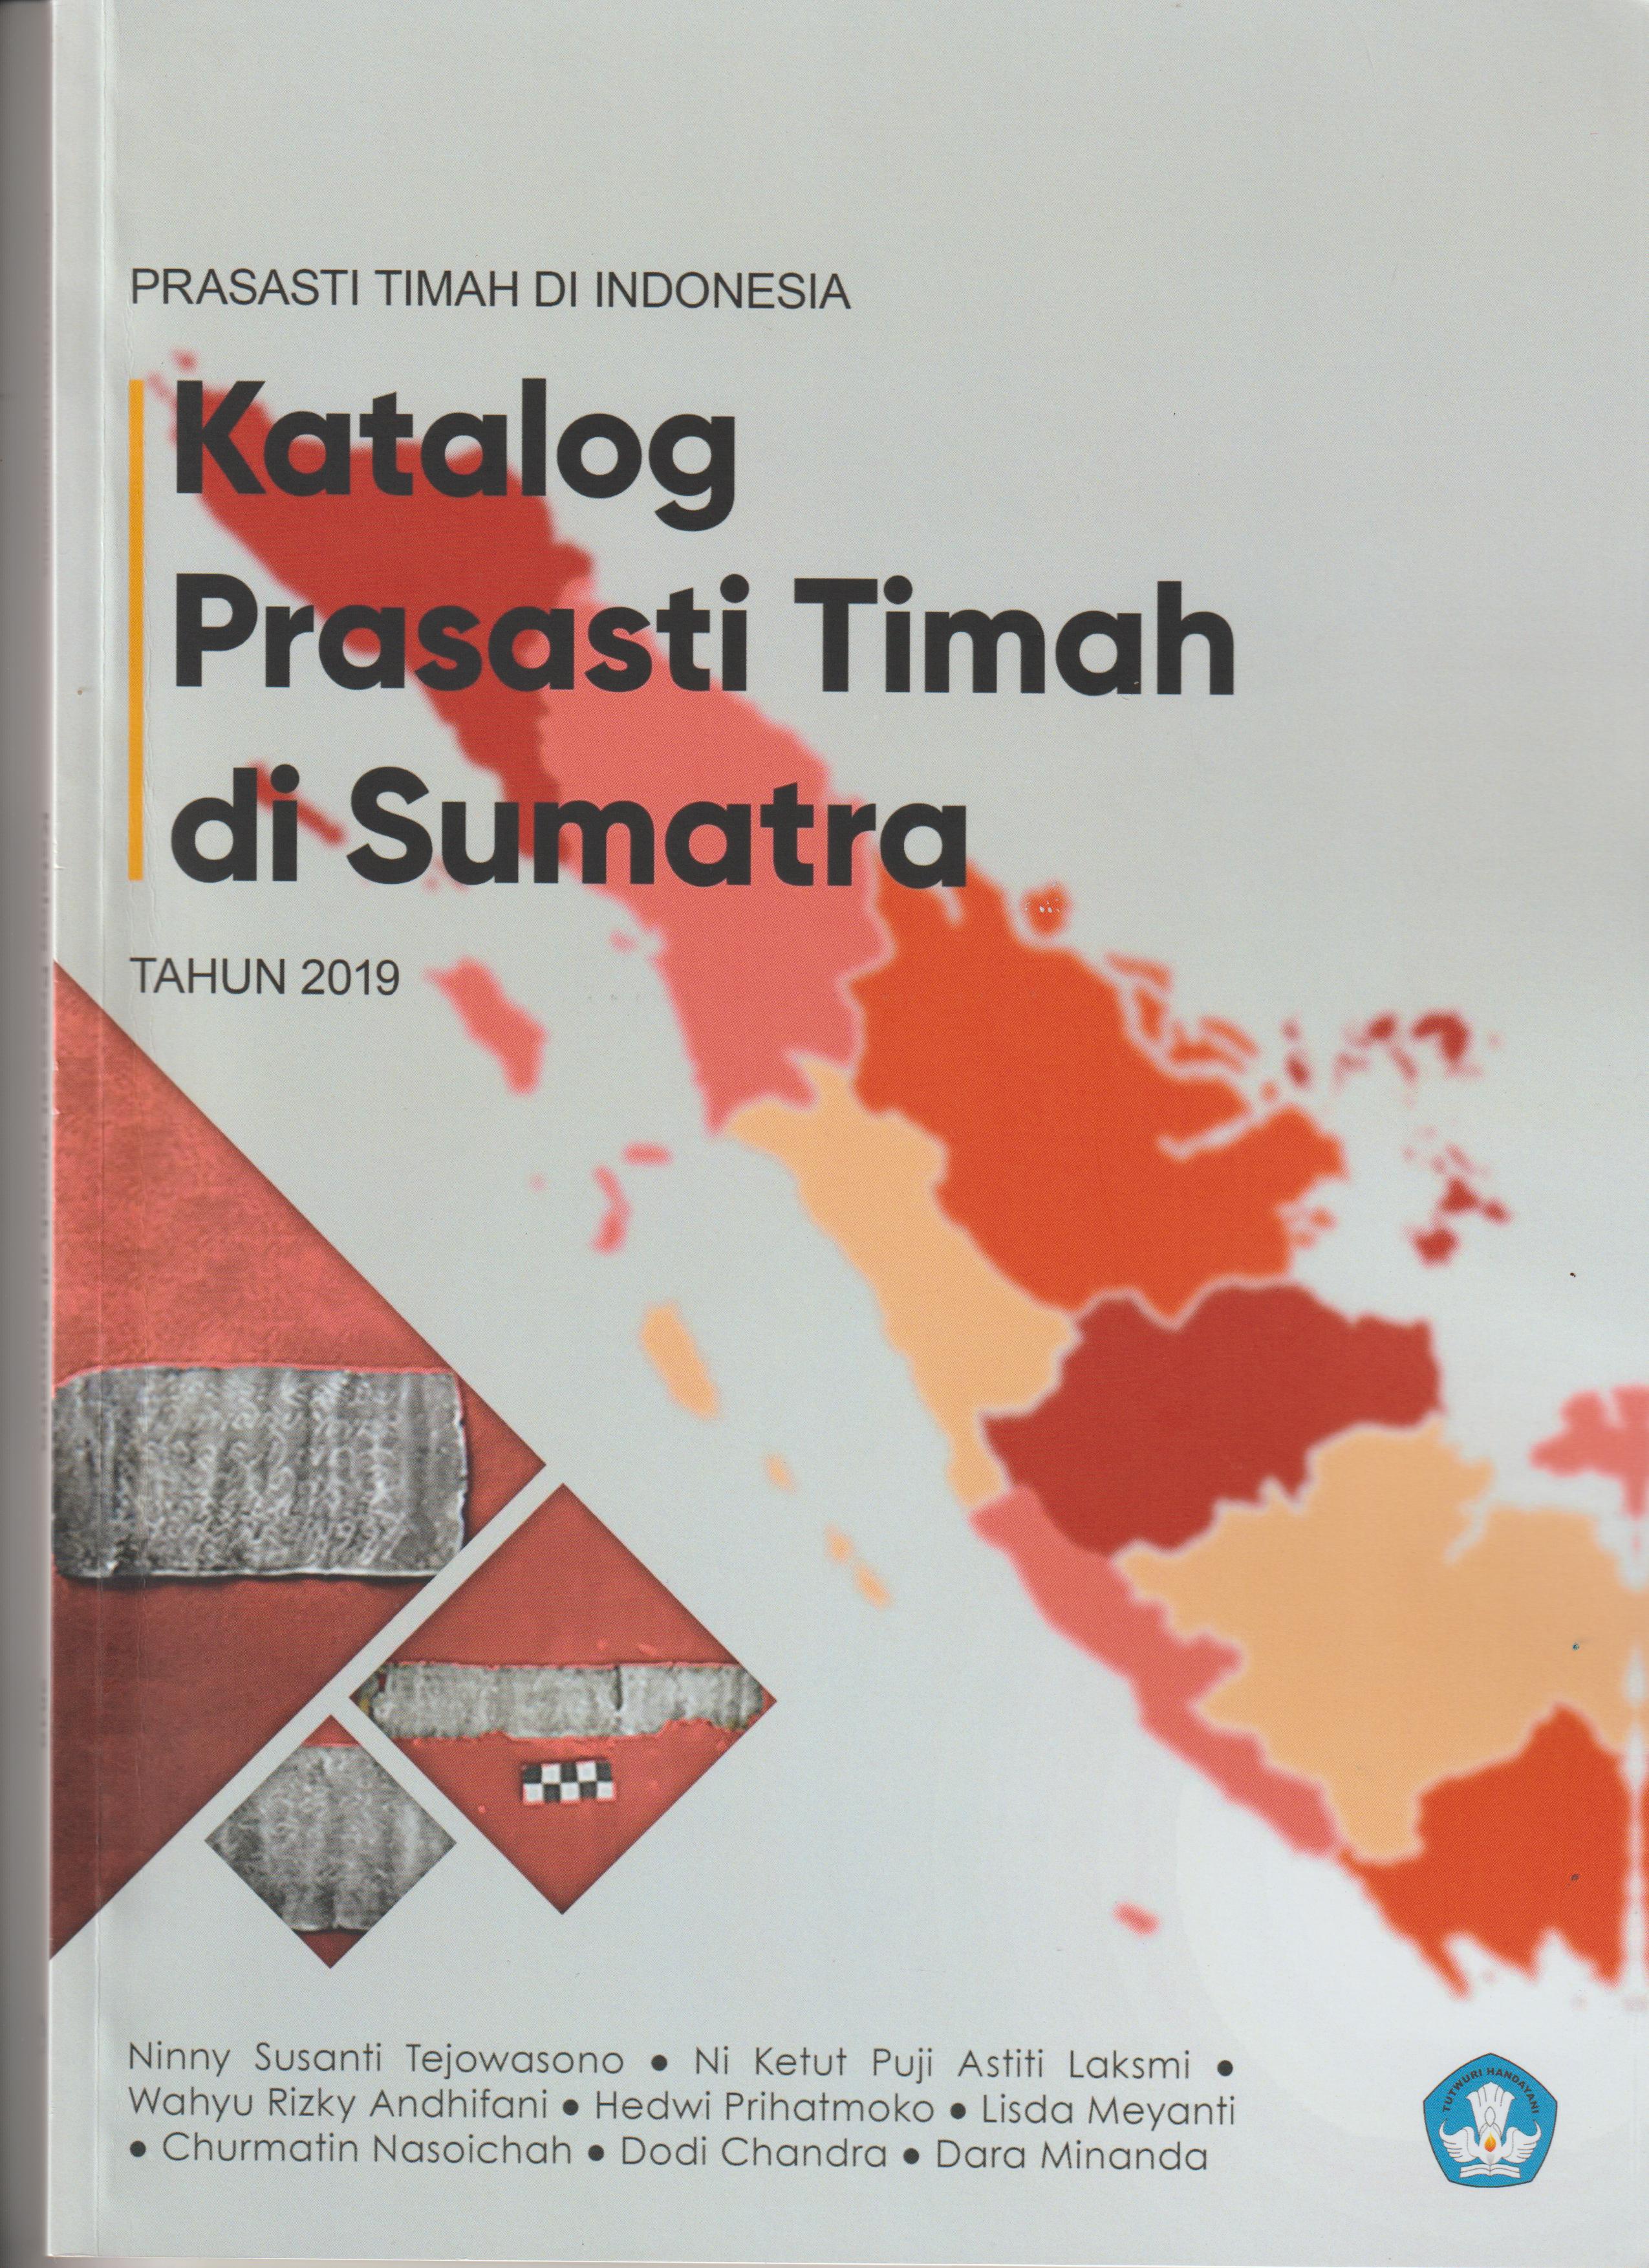 Arkeolog BPCB Sumbar Ikut Menyusun “Katalog Prasasti Timah di Sumatera”